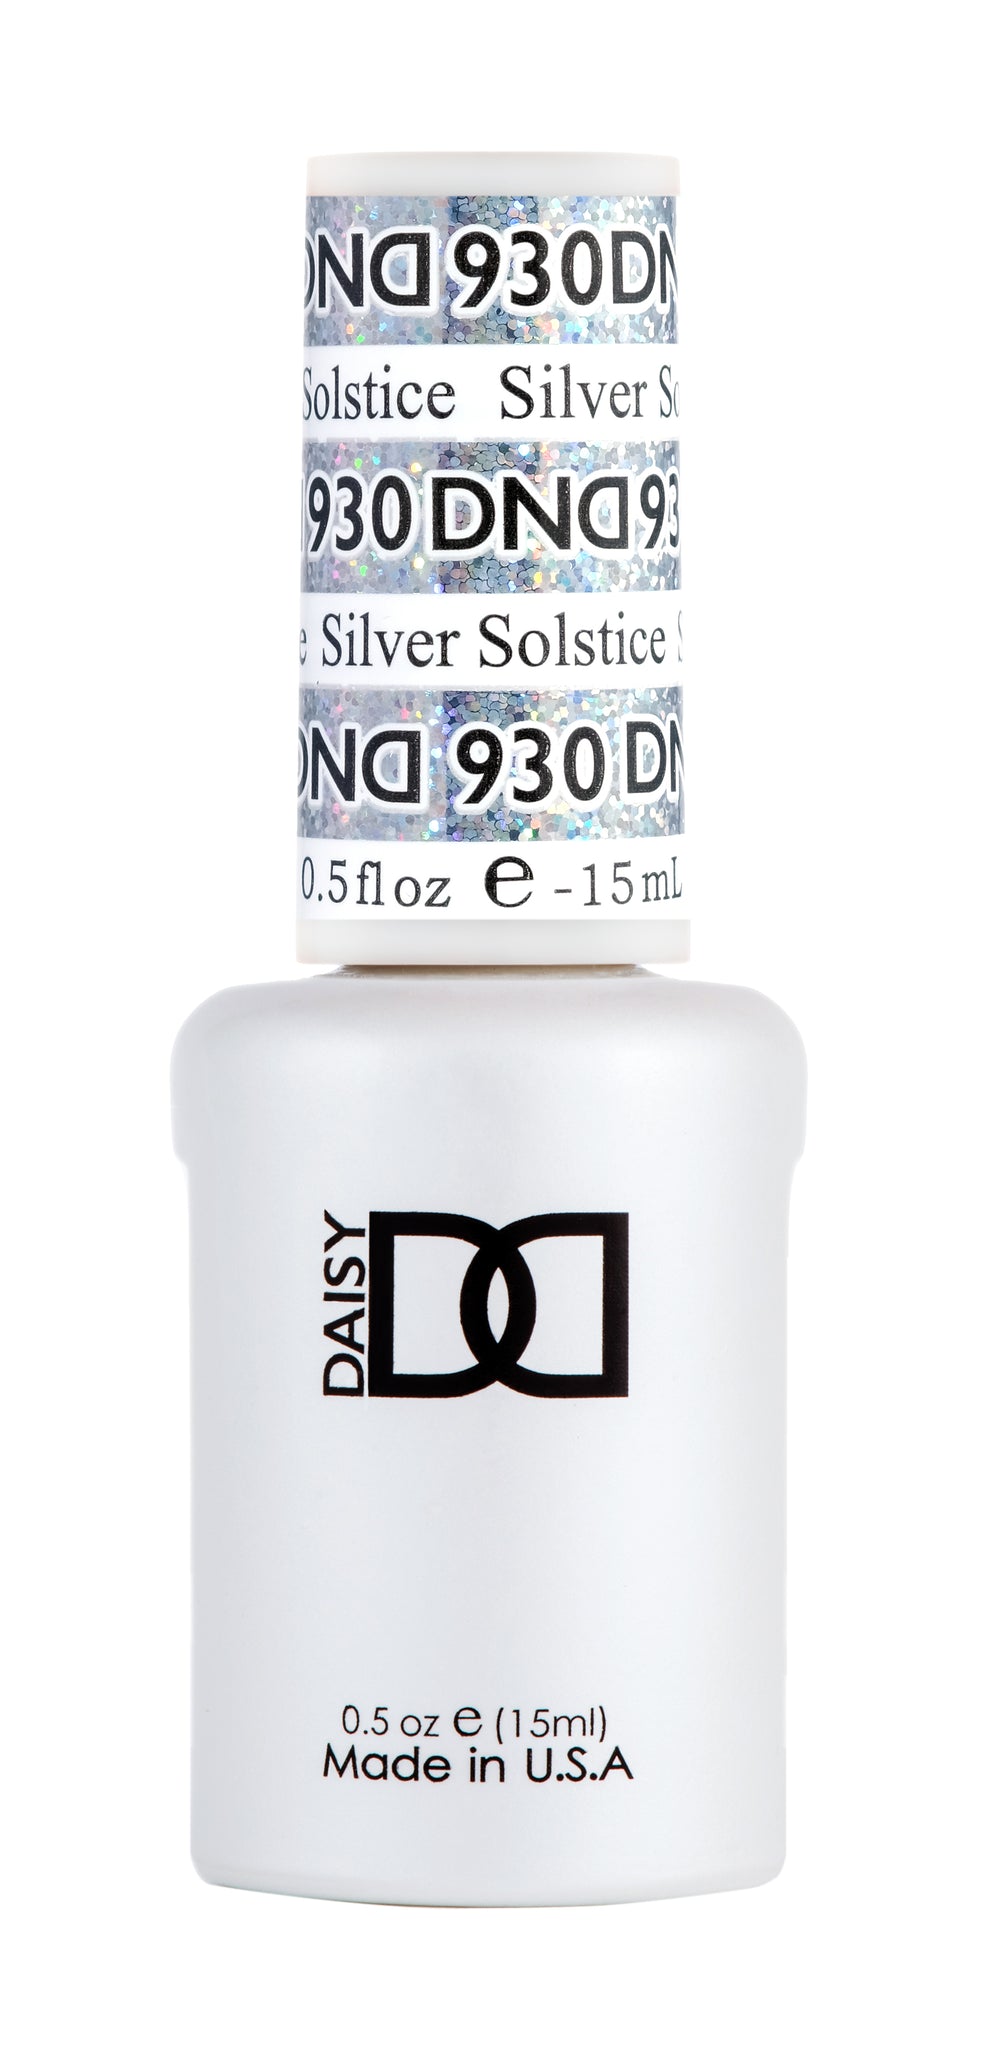 DND - Duo Silver Solstice #930